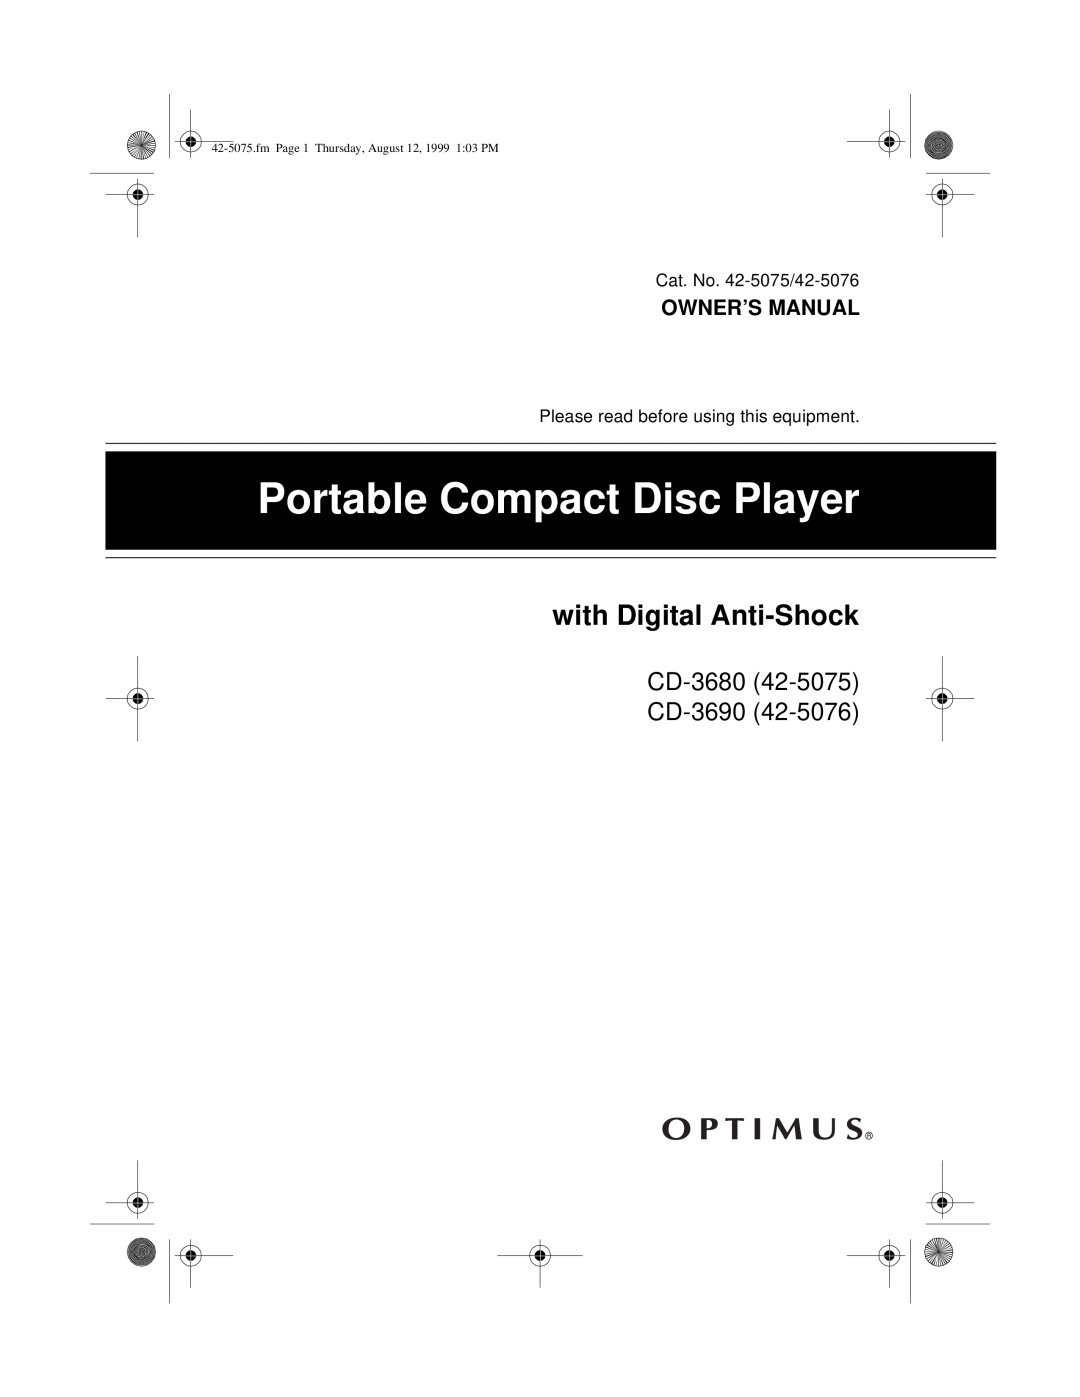 Optimus CD-3690 (42-5076) owner manual with Digital Anti-Shock, Portable Compact Disc Player, CD-3680 CD-3690 